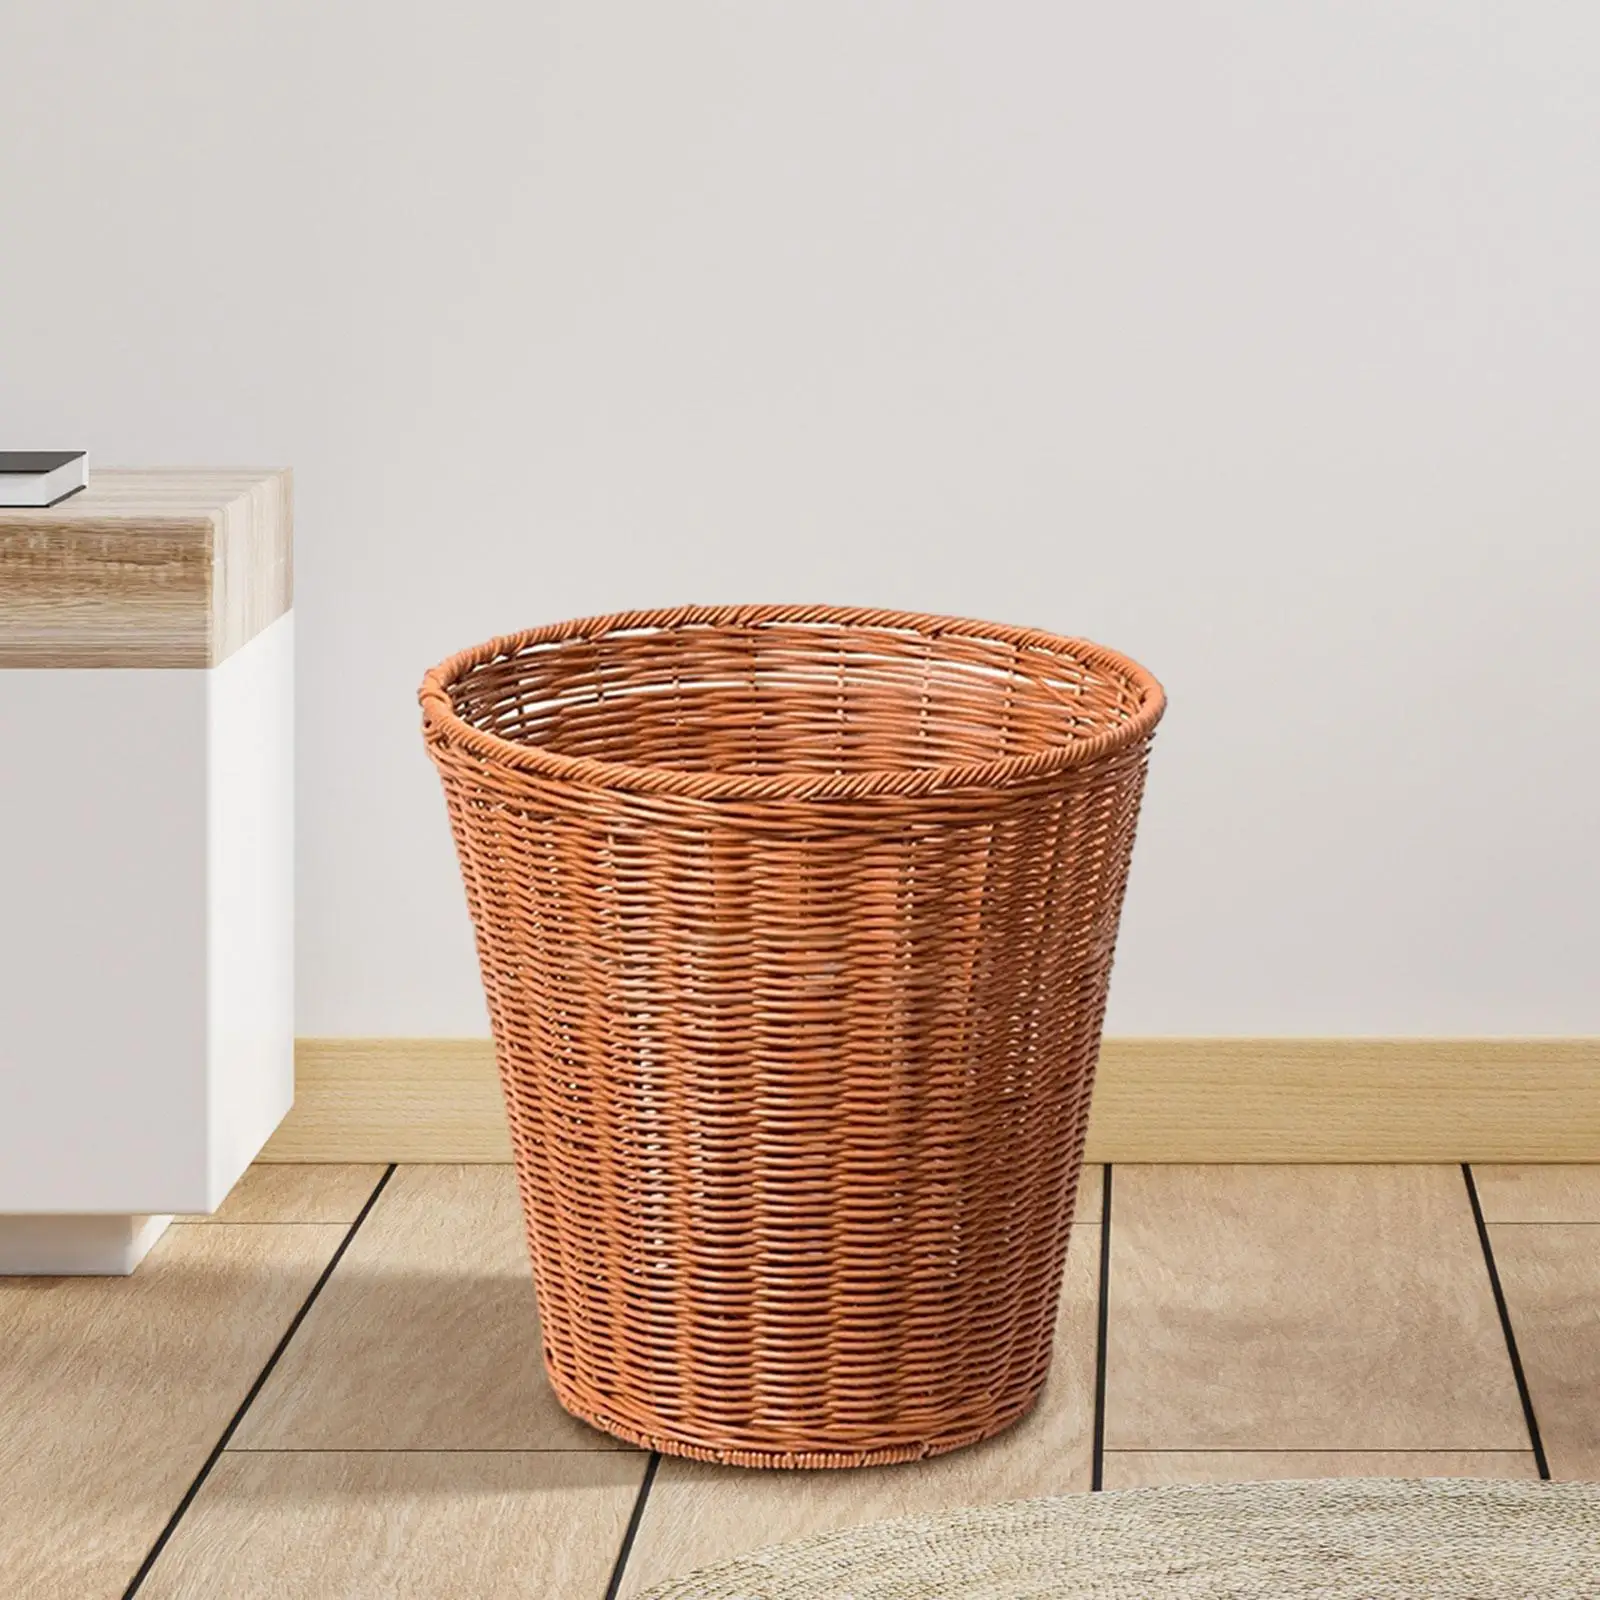 Woven Wastebasket Round Imitation Rattan Waste Basket Wicker Trash Can for Laundry Room Office Bathroom Playroom Bedroom